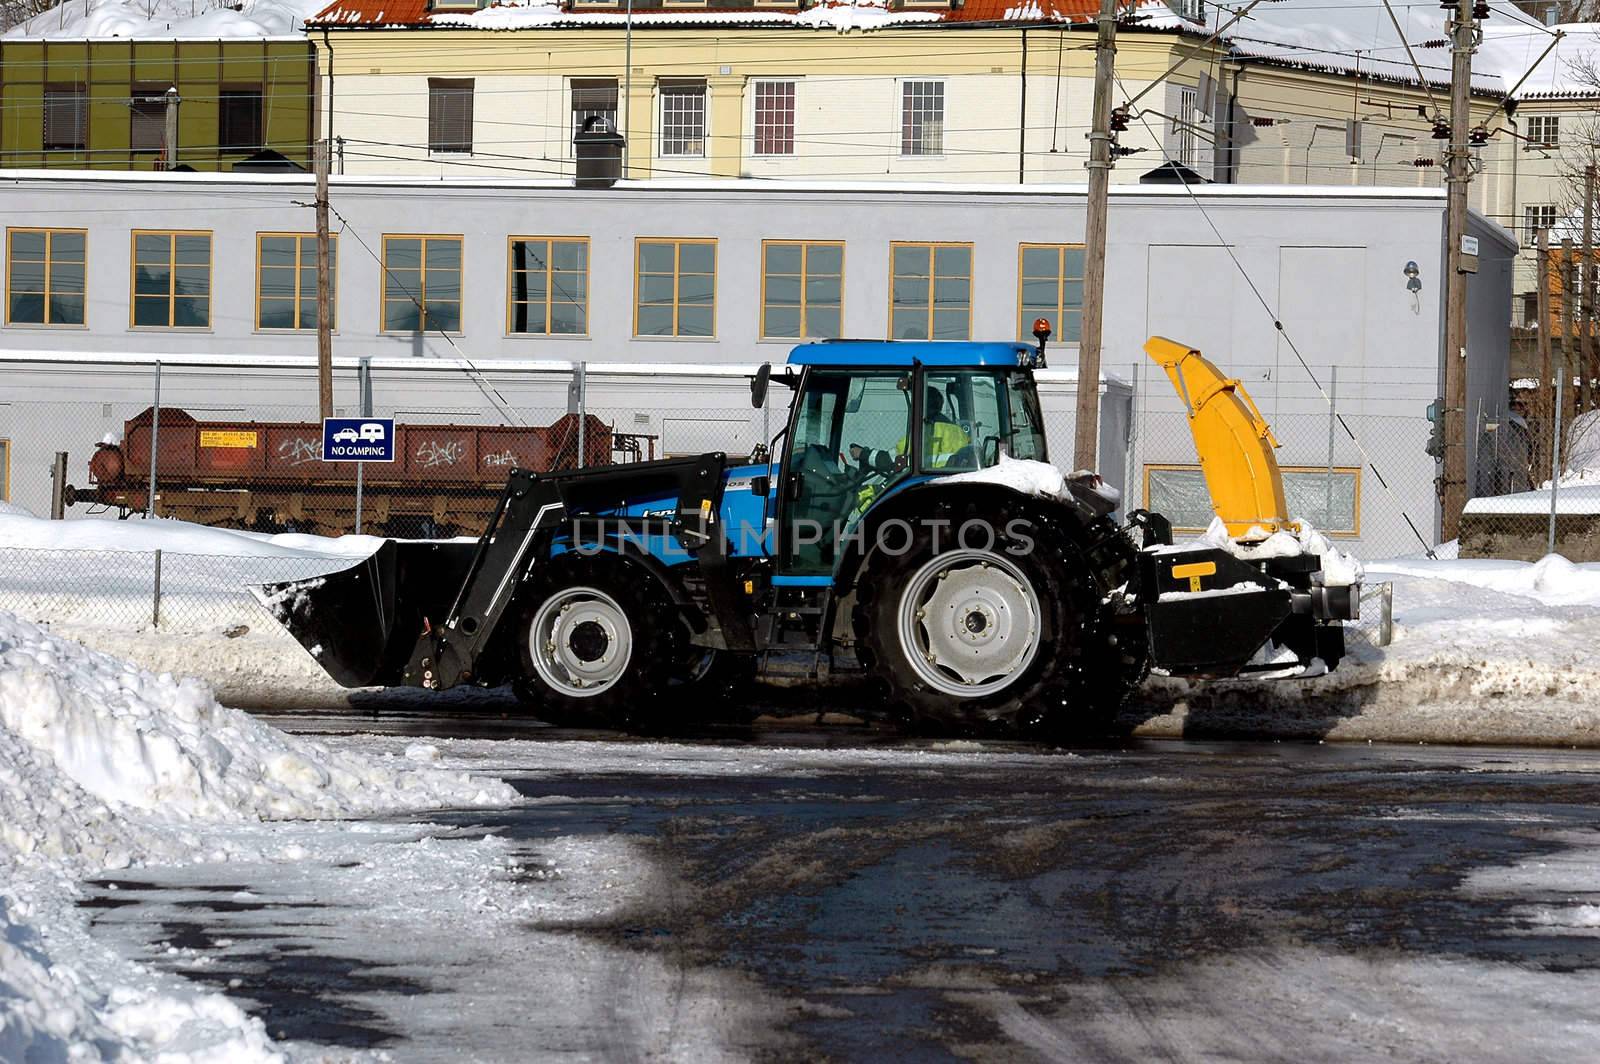 Driving snow away. Norwegian winter.
Larvik, Vestfold, Norway. - 2006.